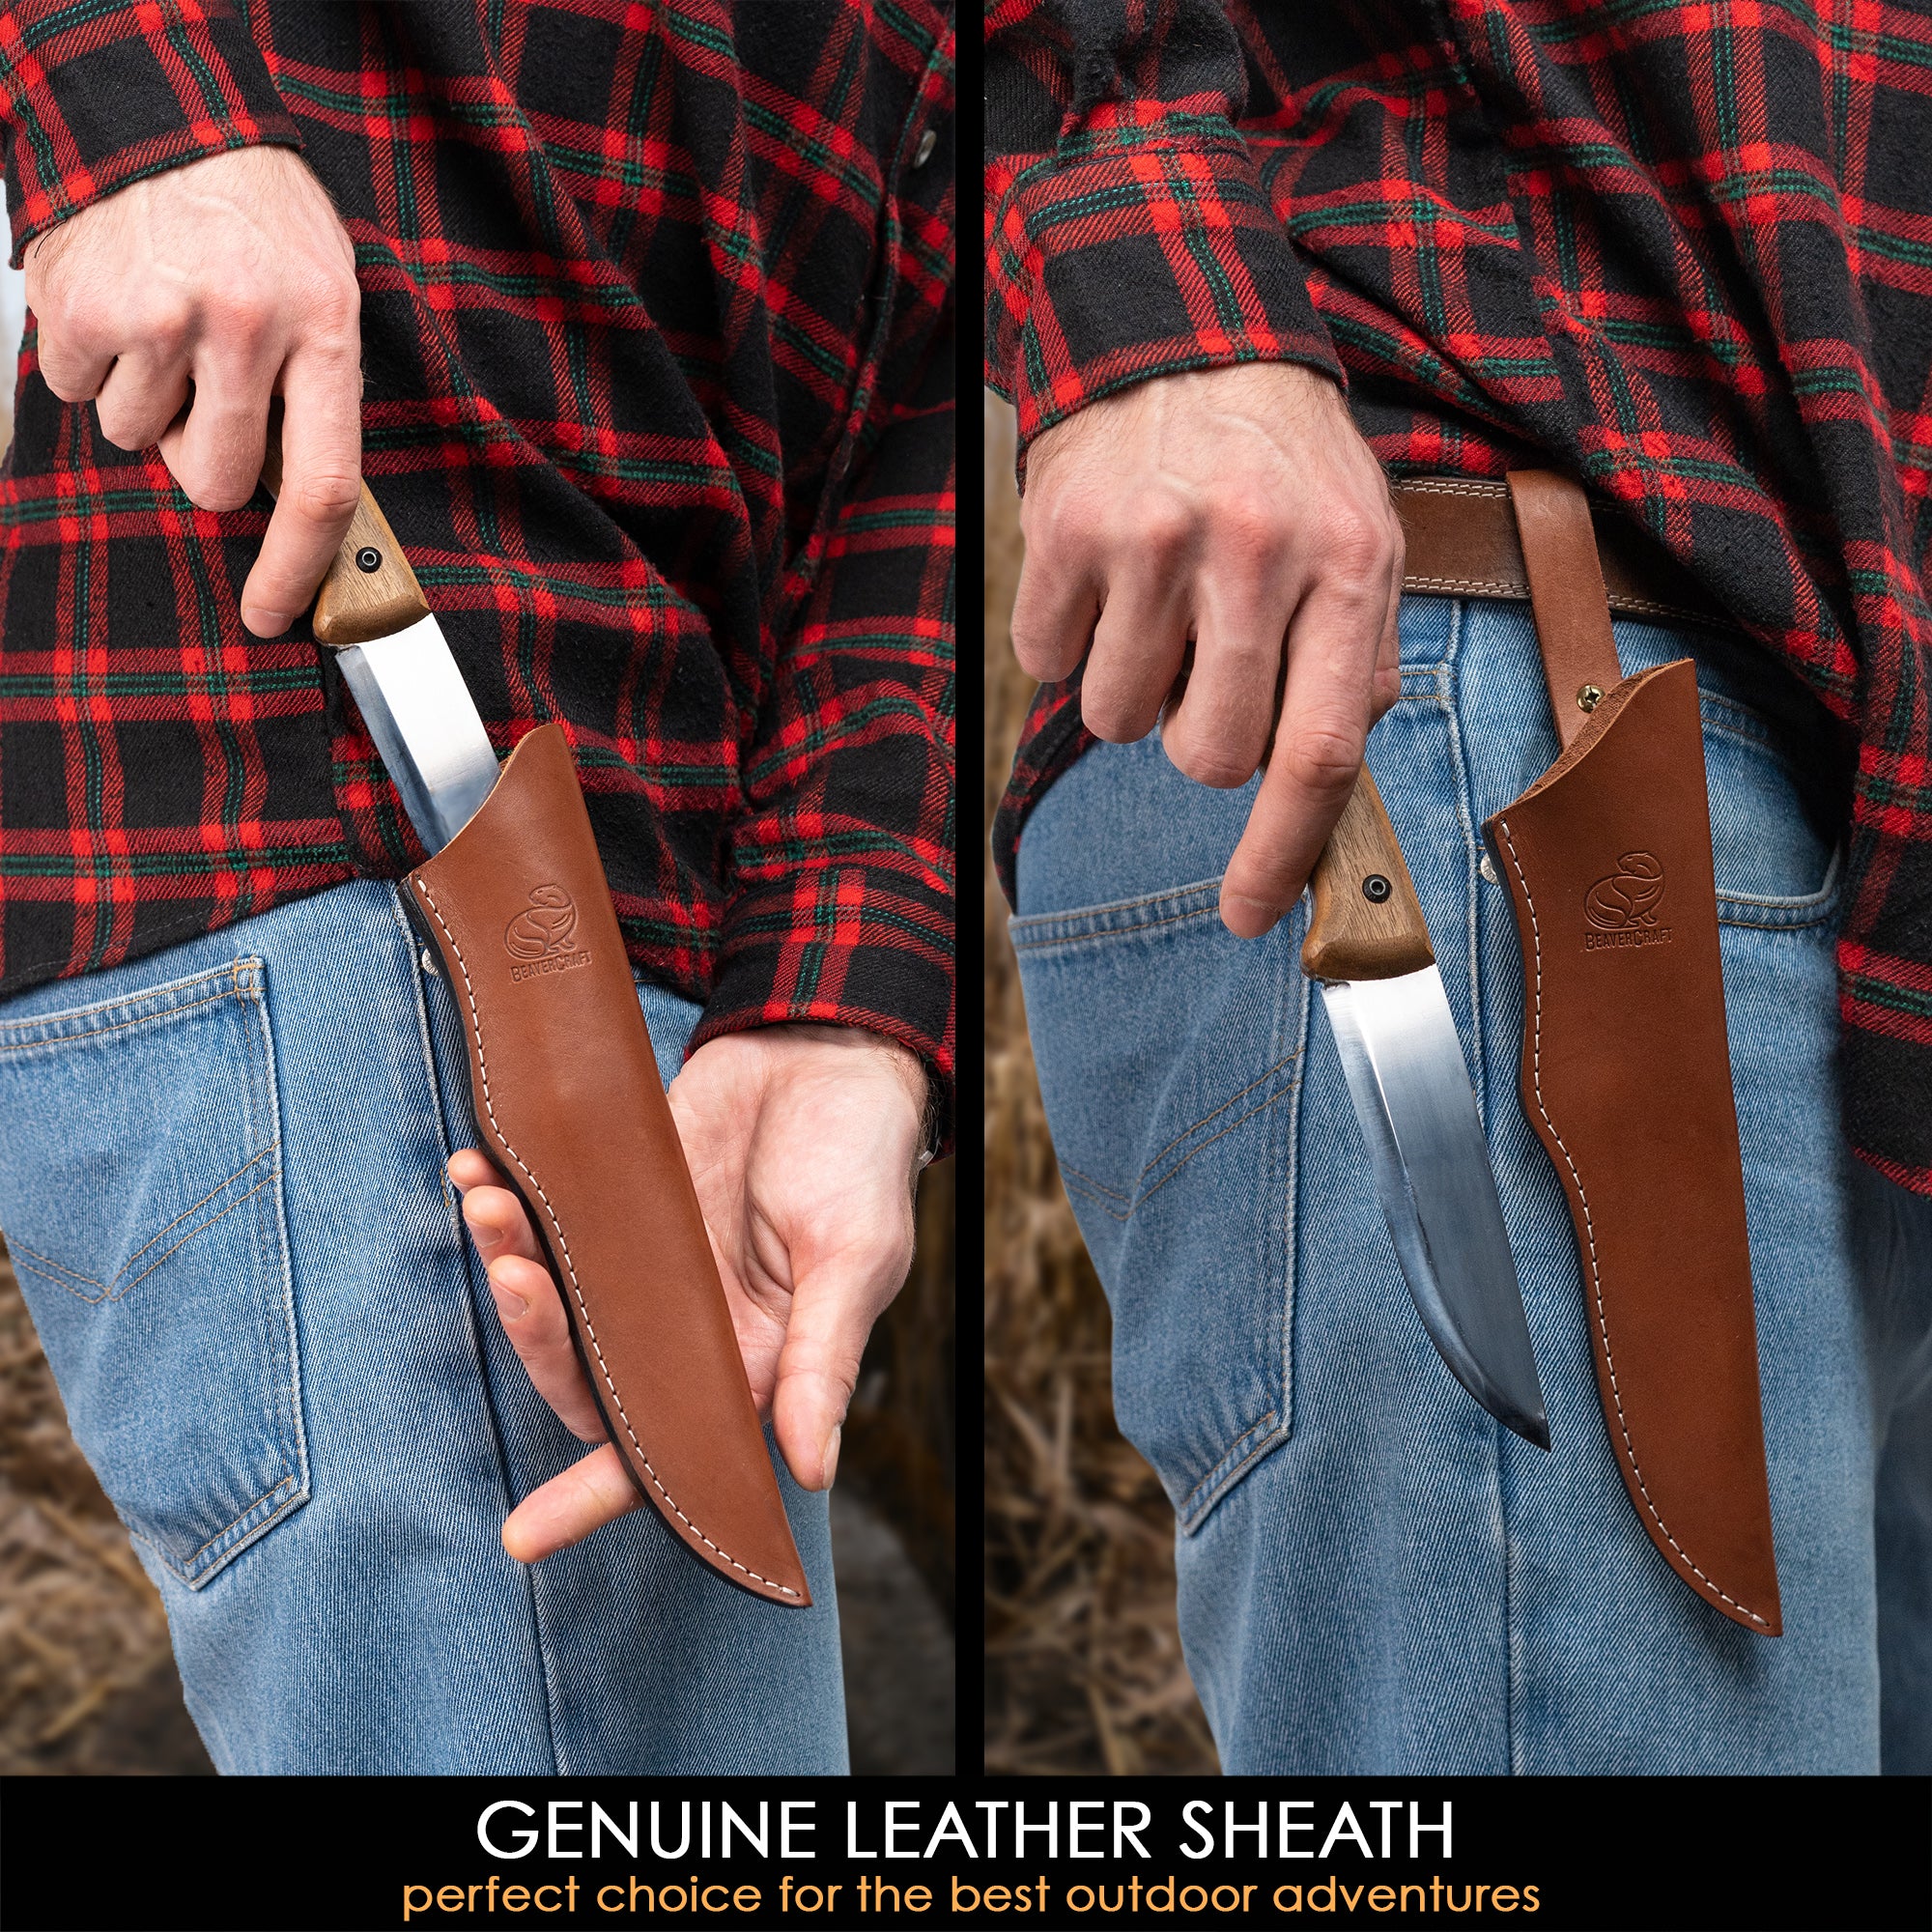 Genuine Leather High-End Knife Sheath